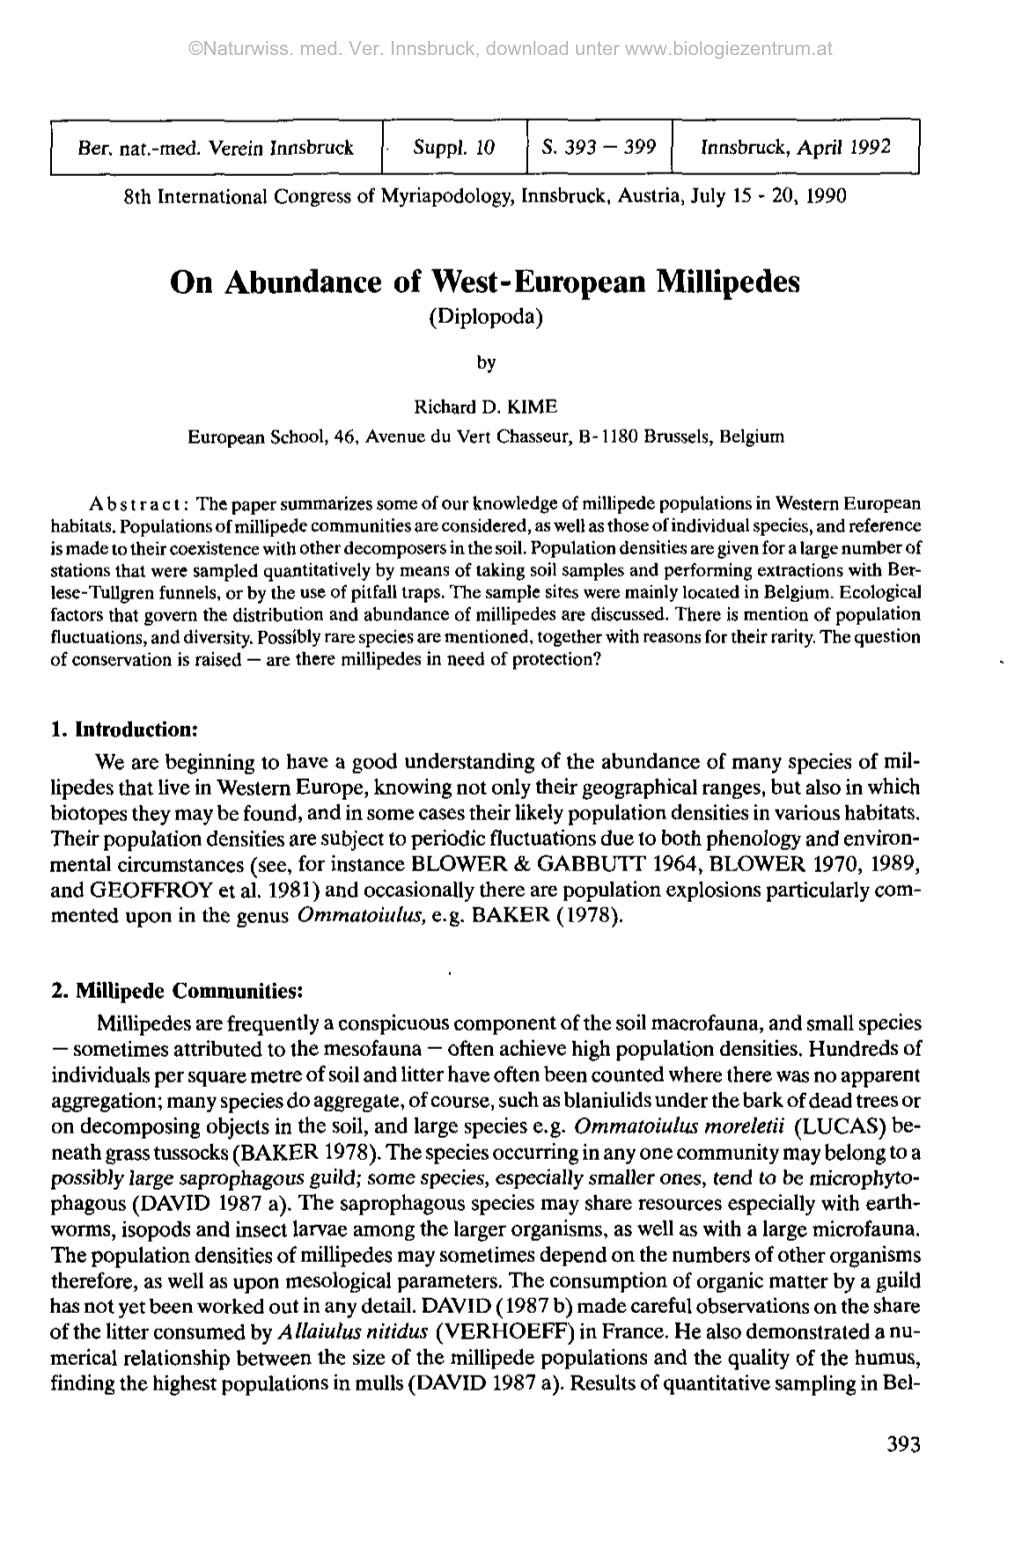 On Abundance of West-European Millipedes (Diplopoda)